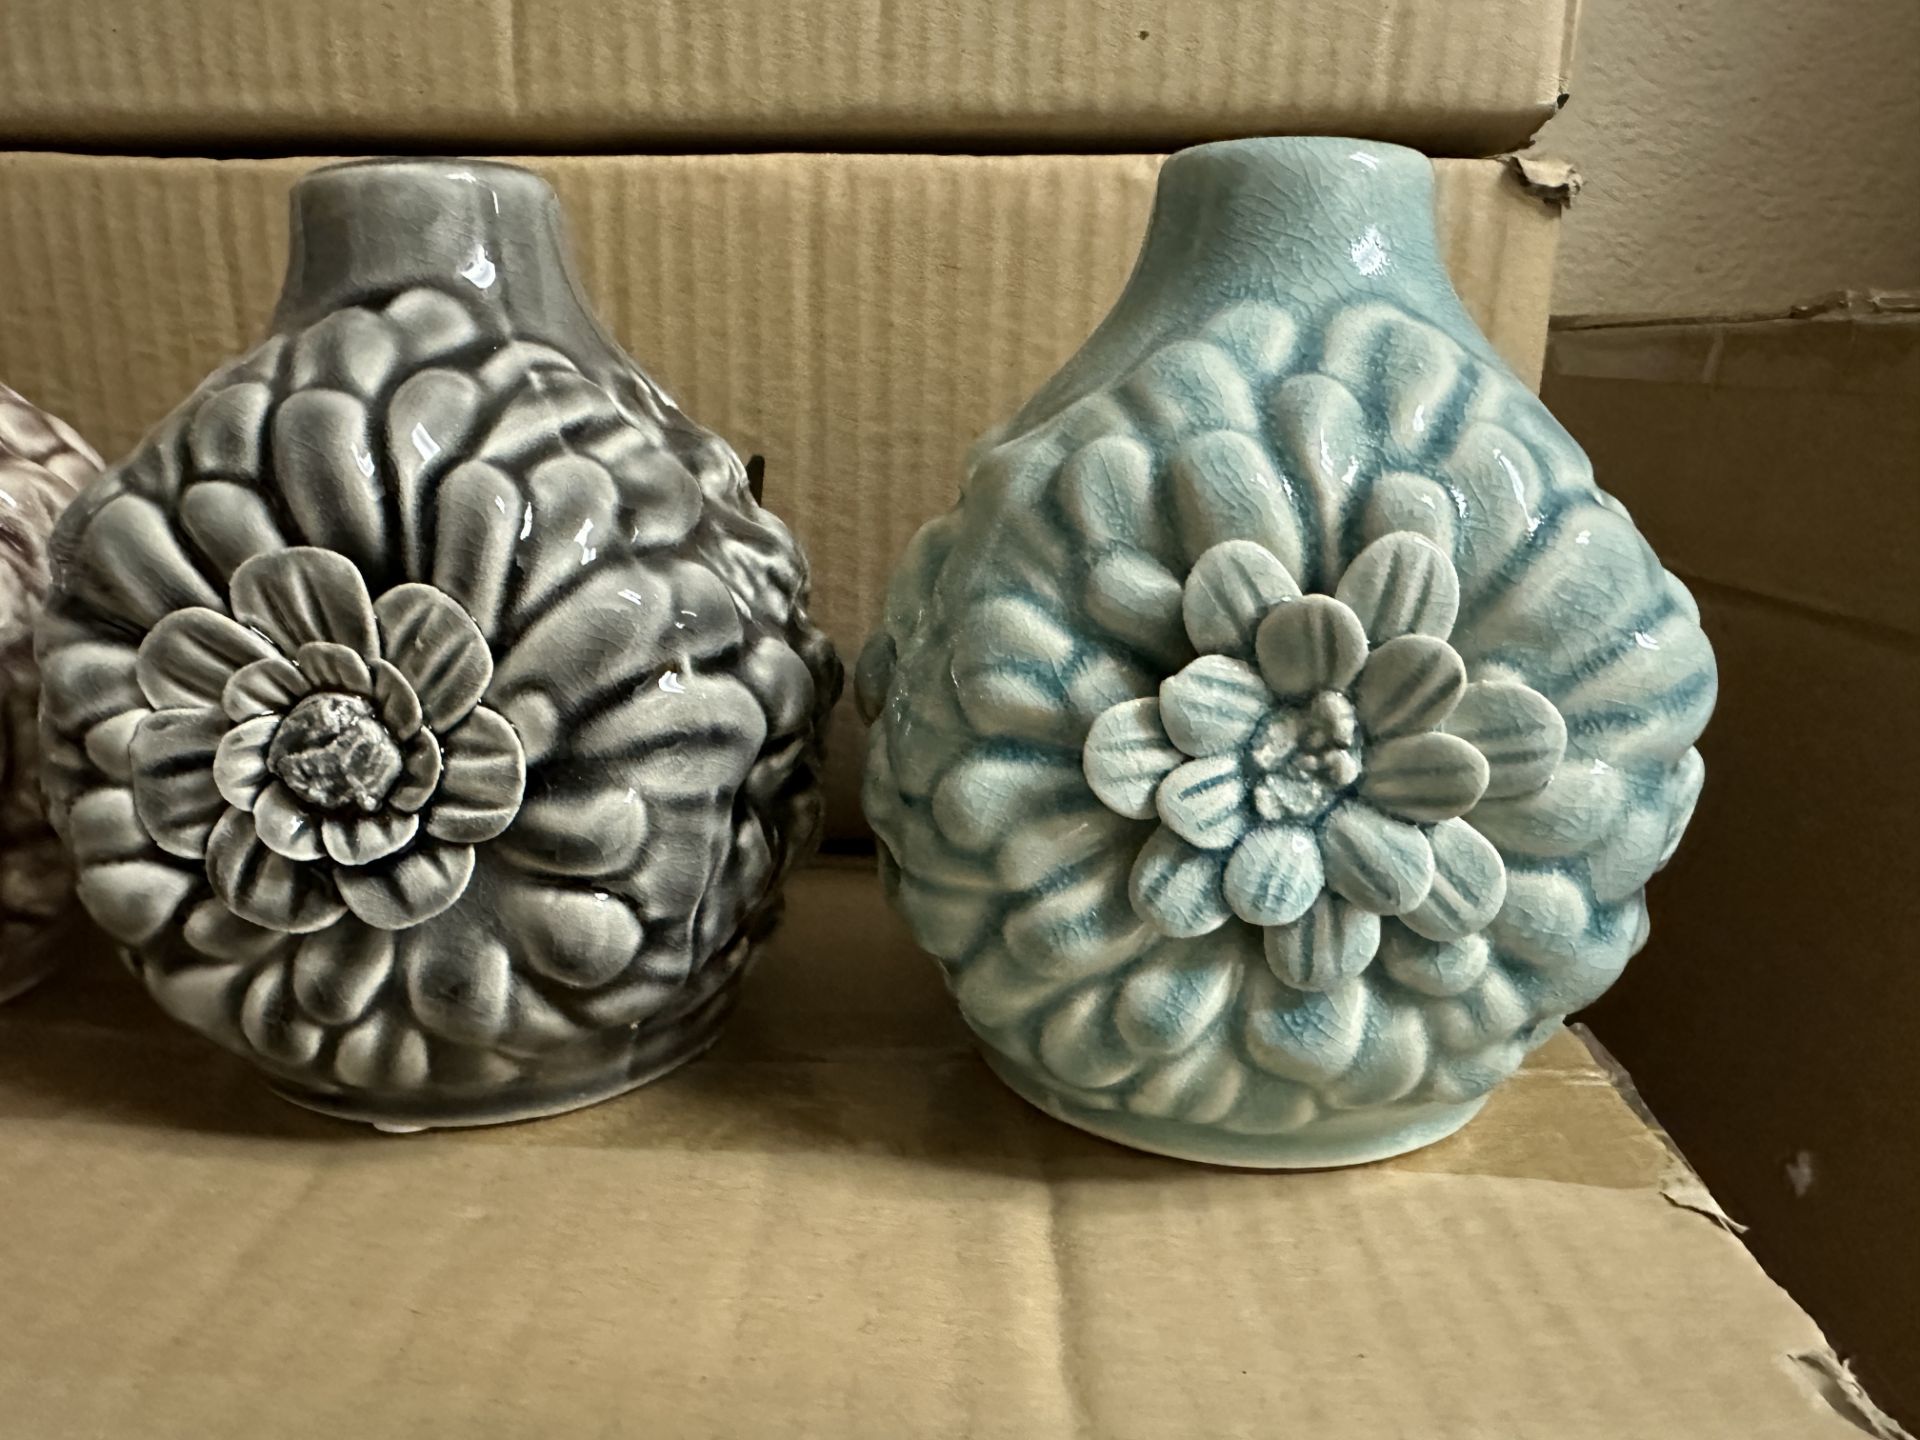 12x Decorative Ceramic Vases with Floral design, 3 different colors, IT221x4 - Image 3 of 5